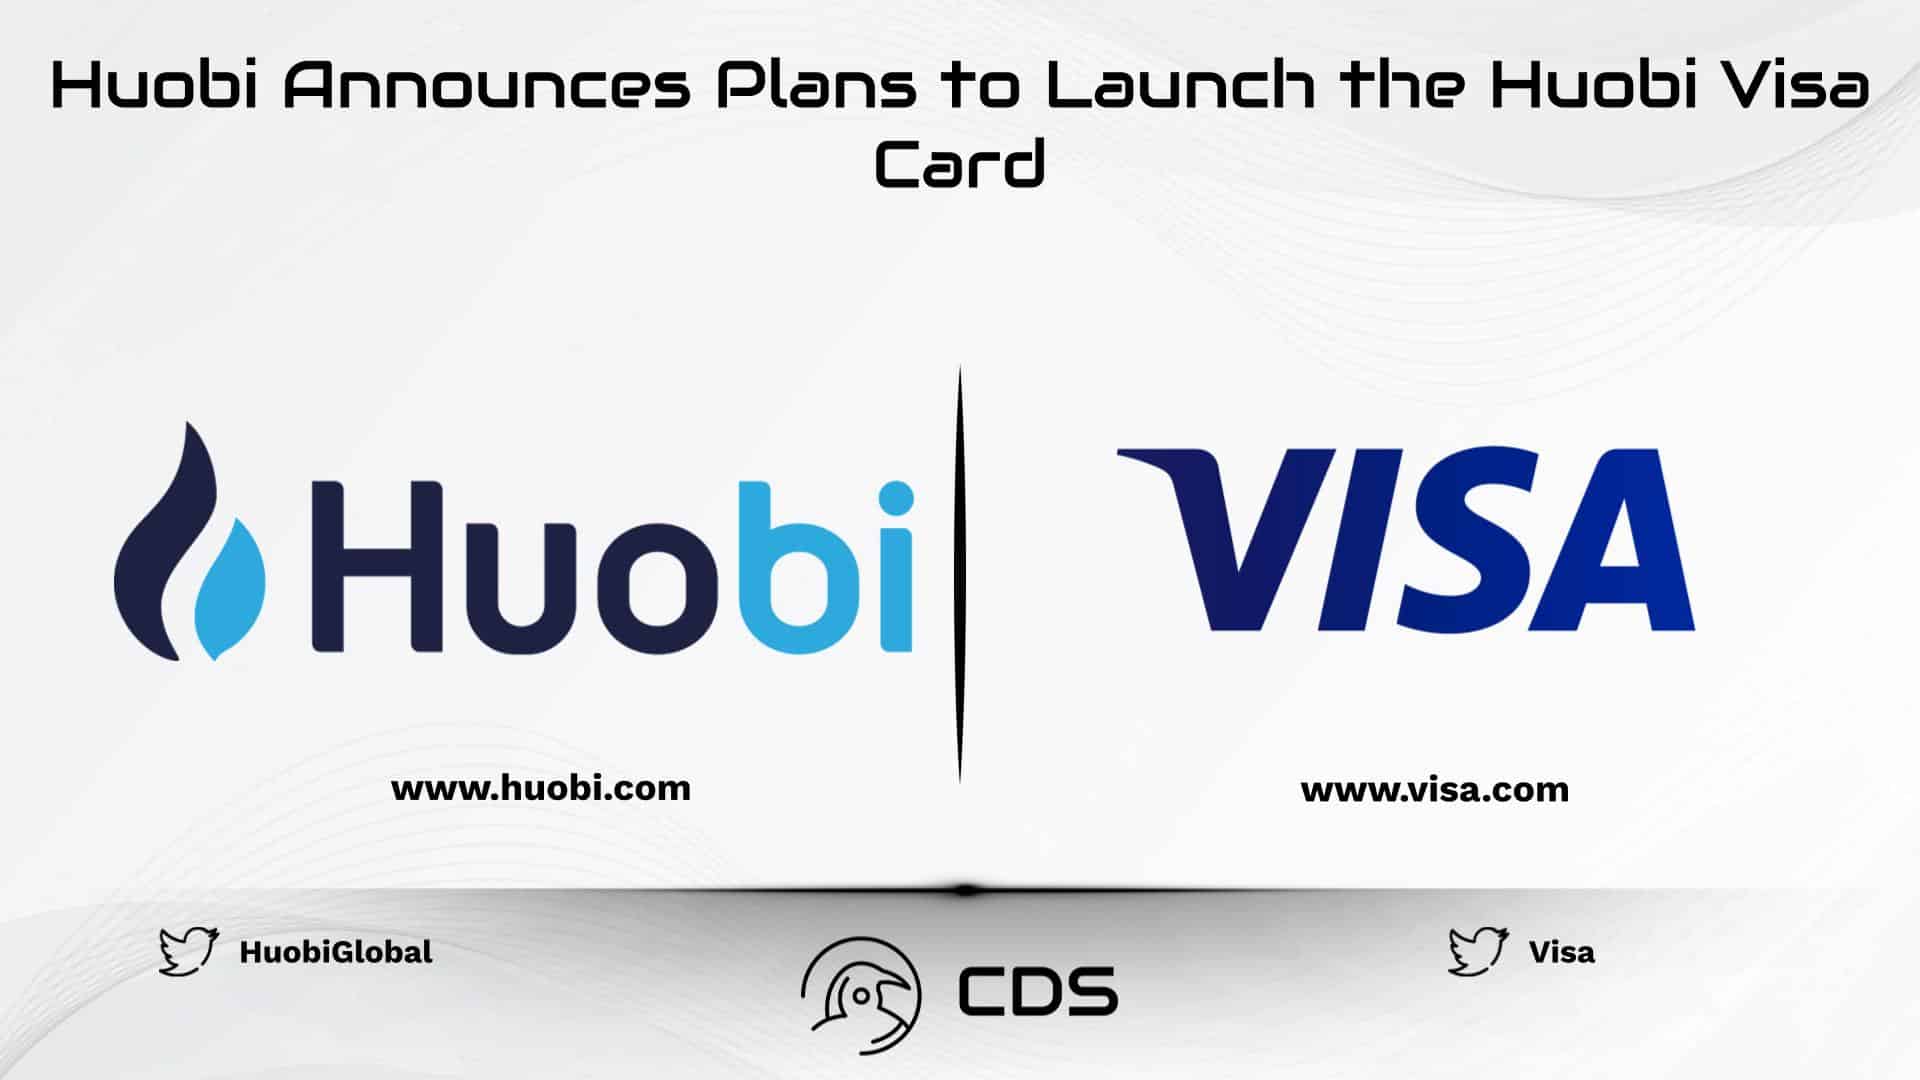 Huobi Announces Plans to Launch the Huobi Visa Card